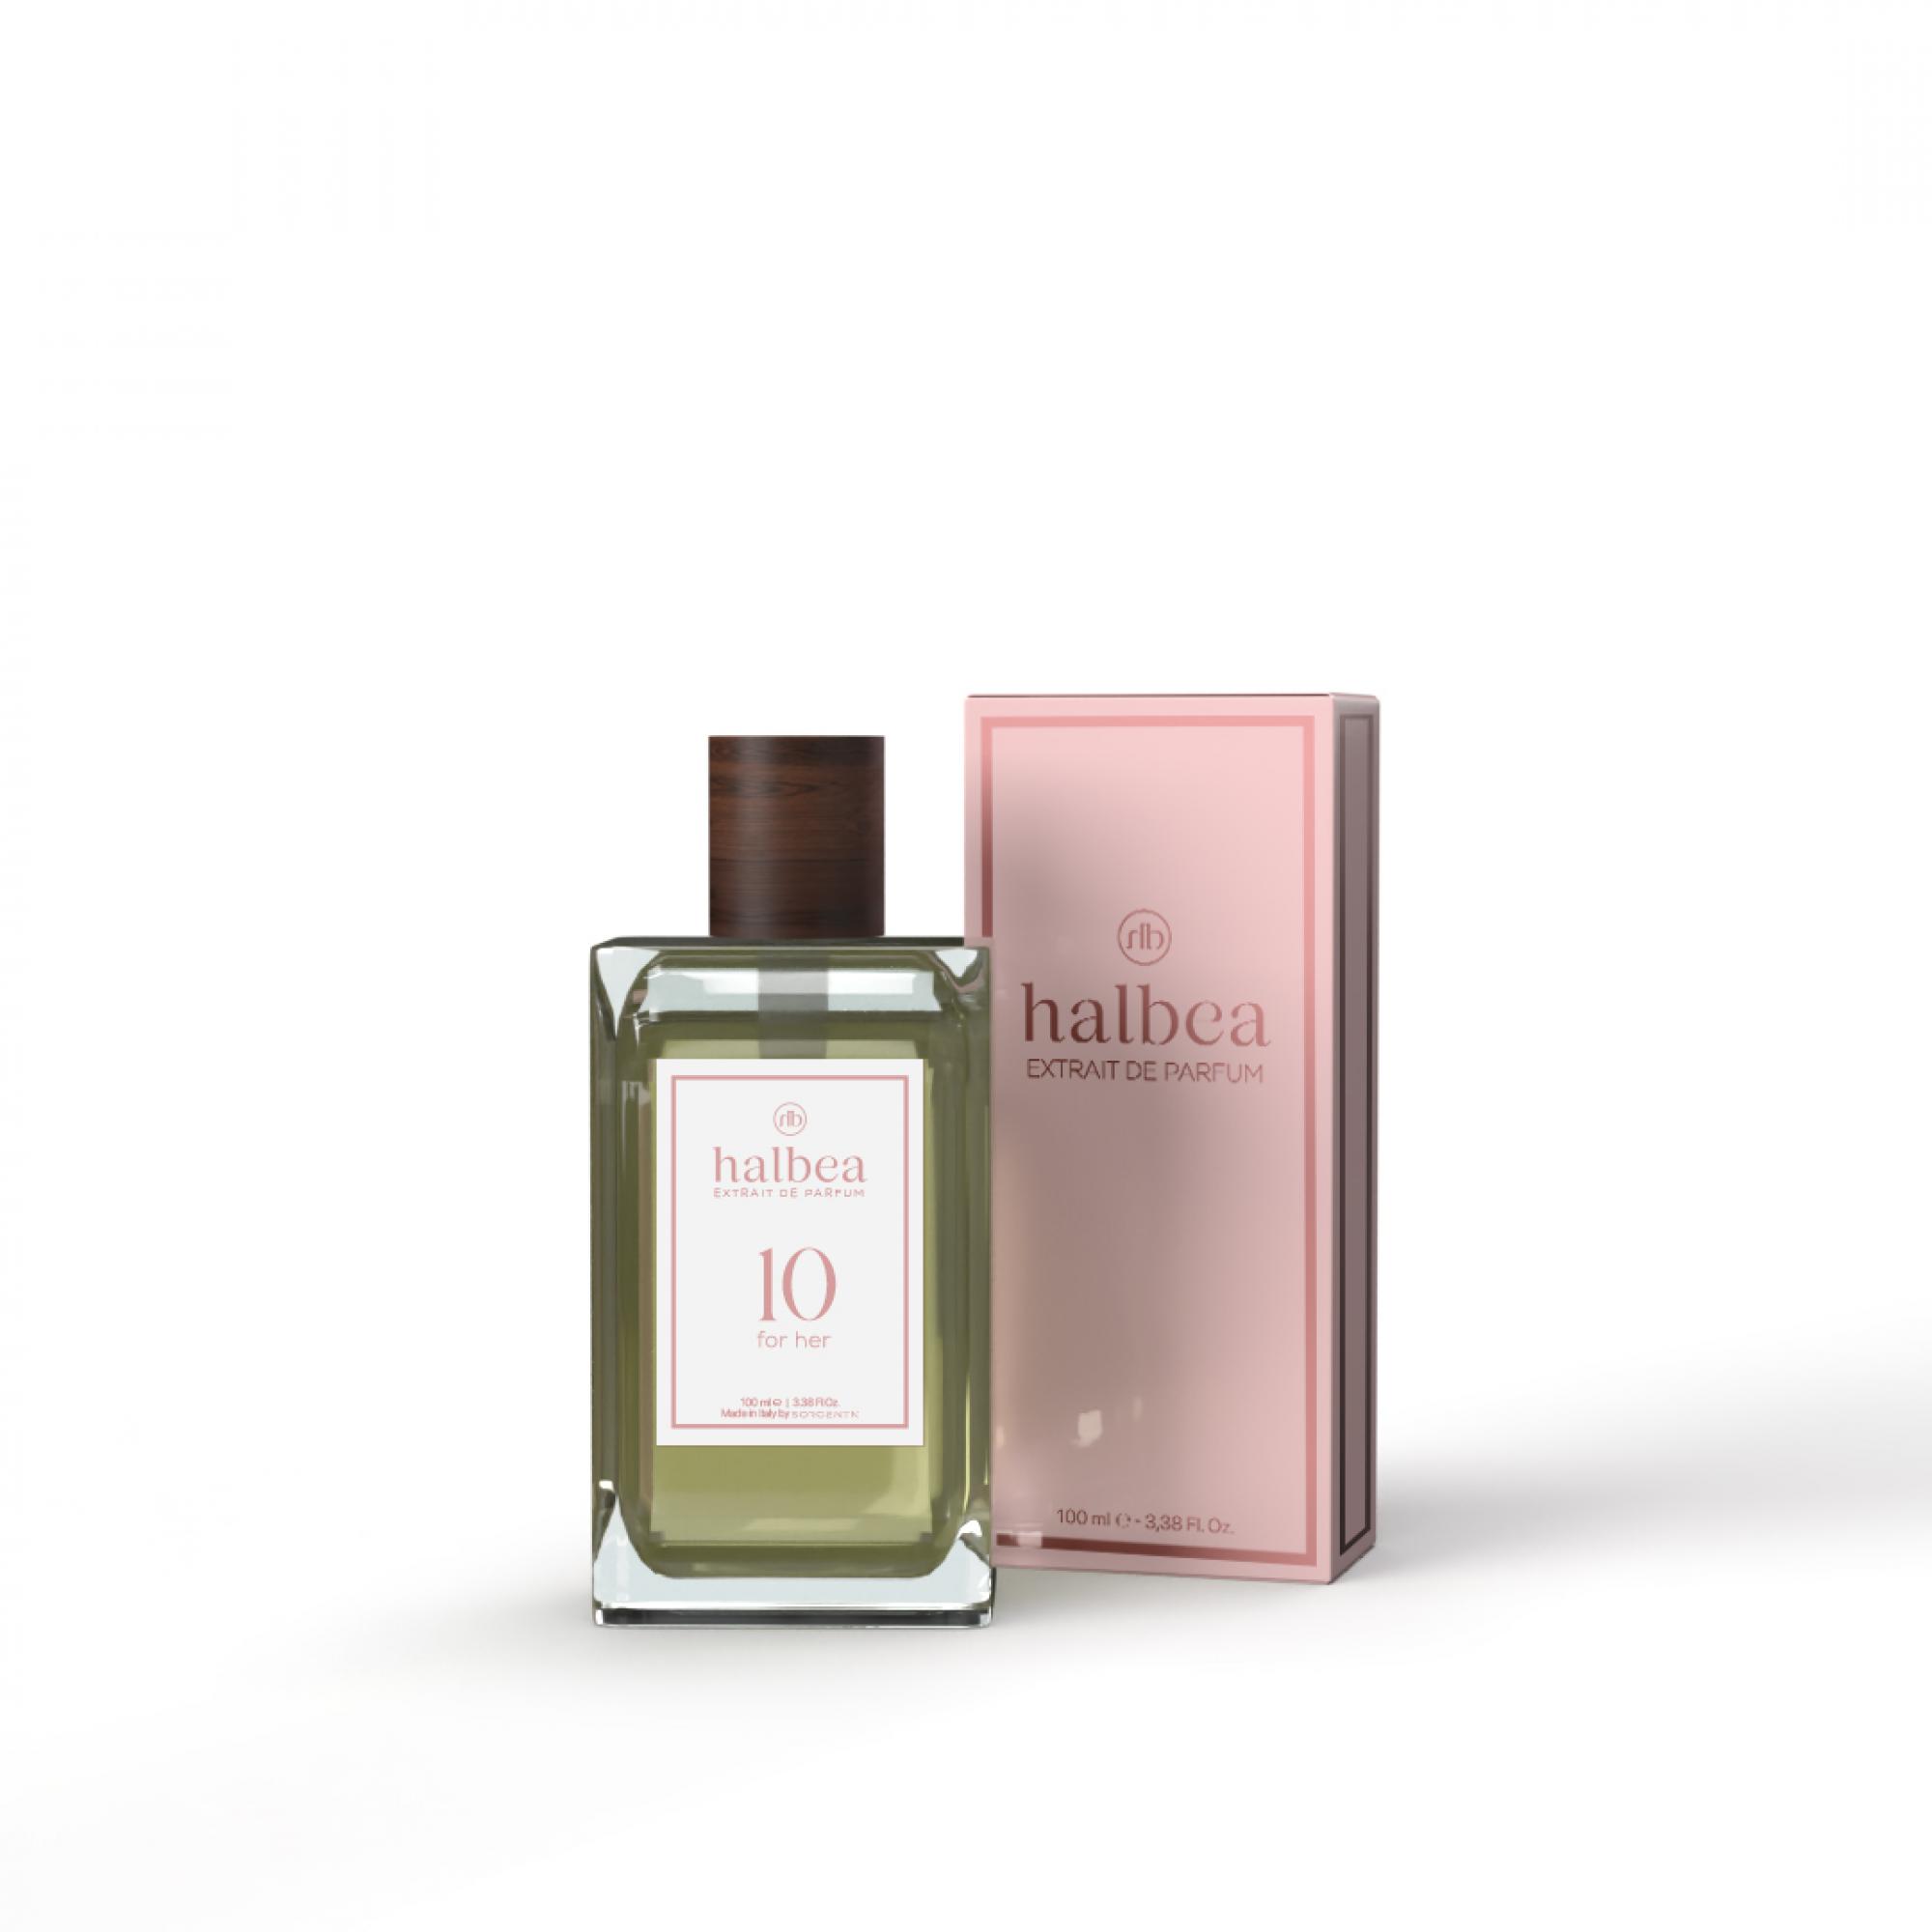 Halbea Parfum Nr. 10 insp. by Laura Biagiotti Roma 100ml